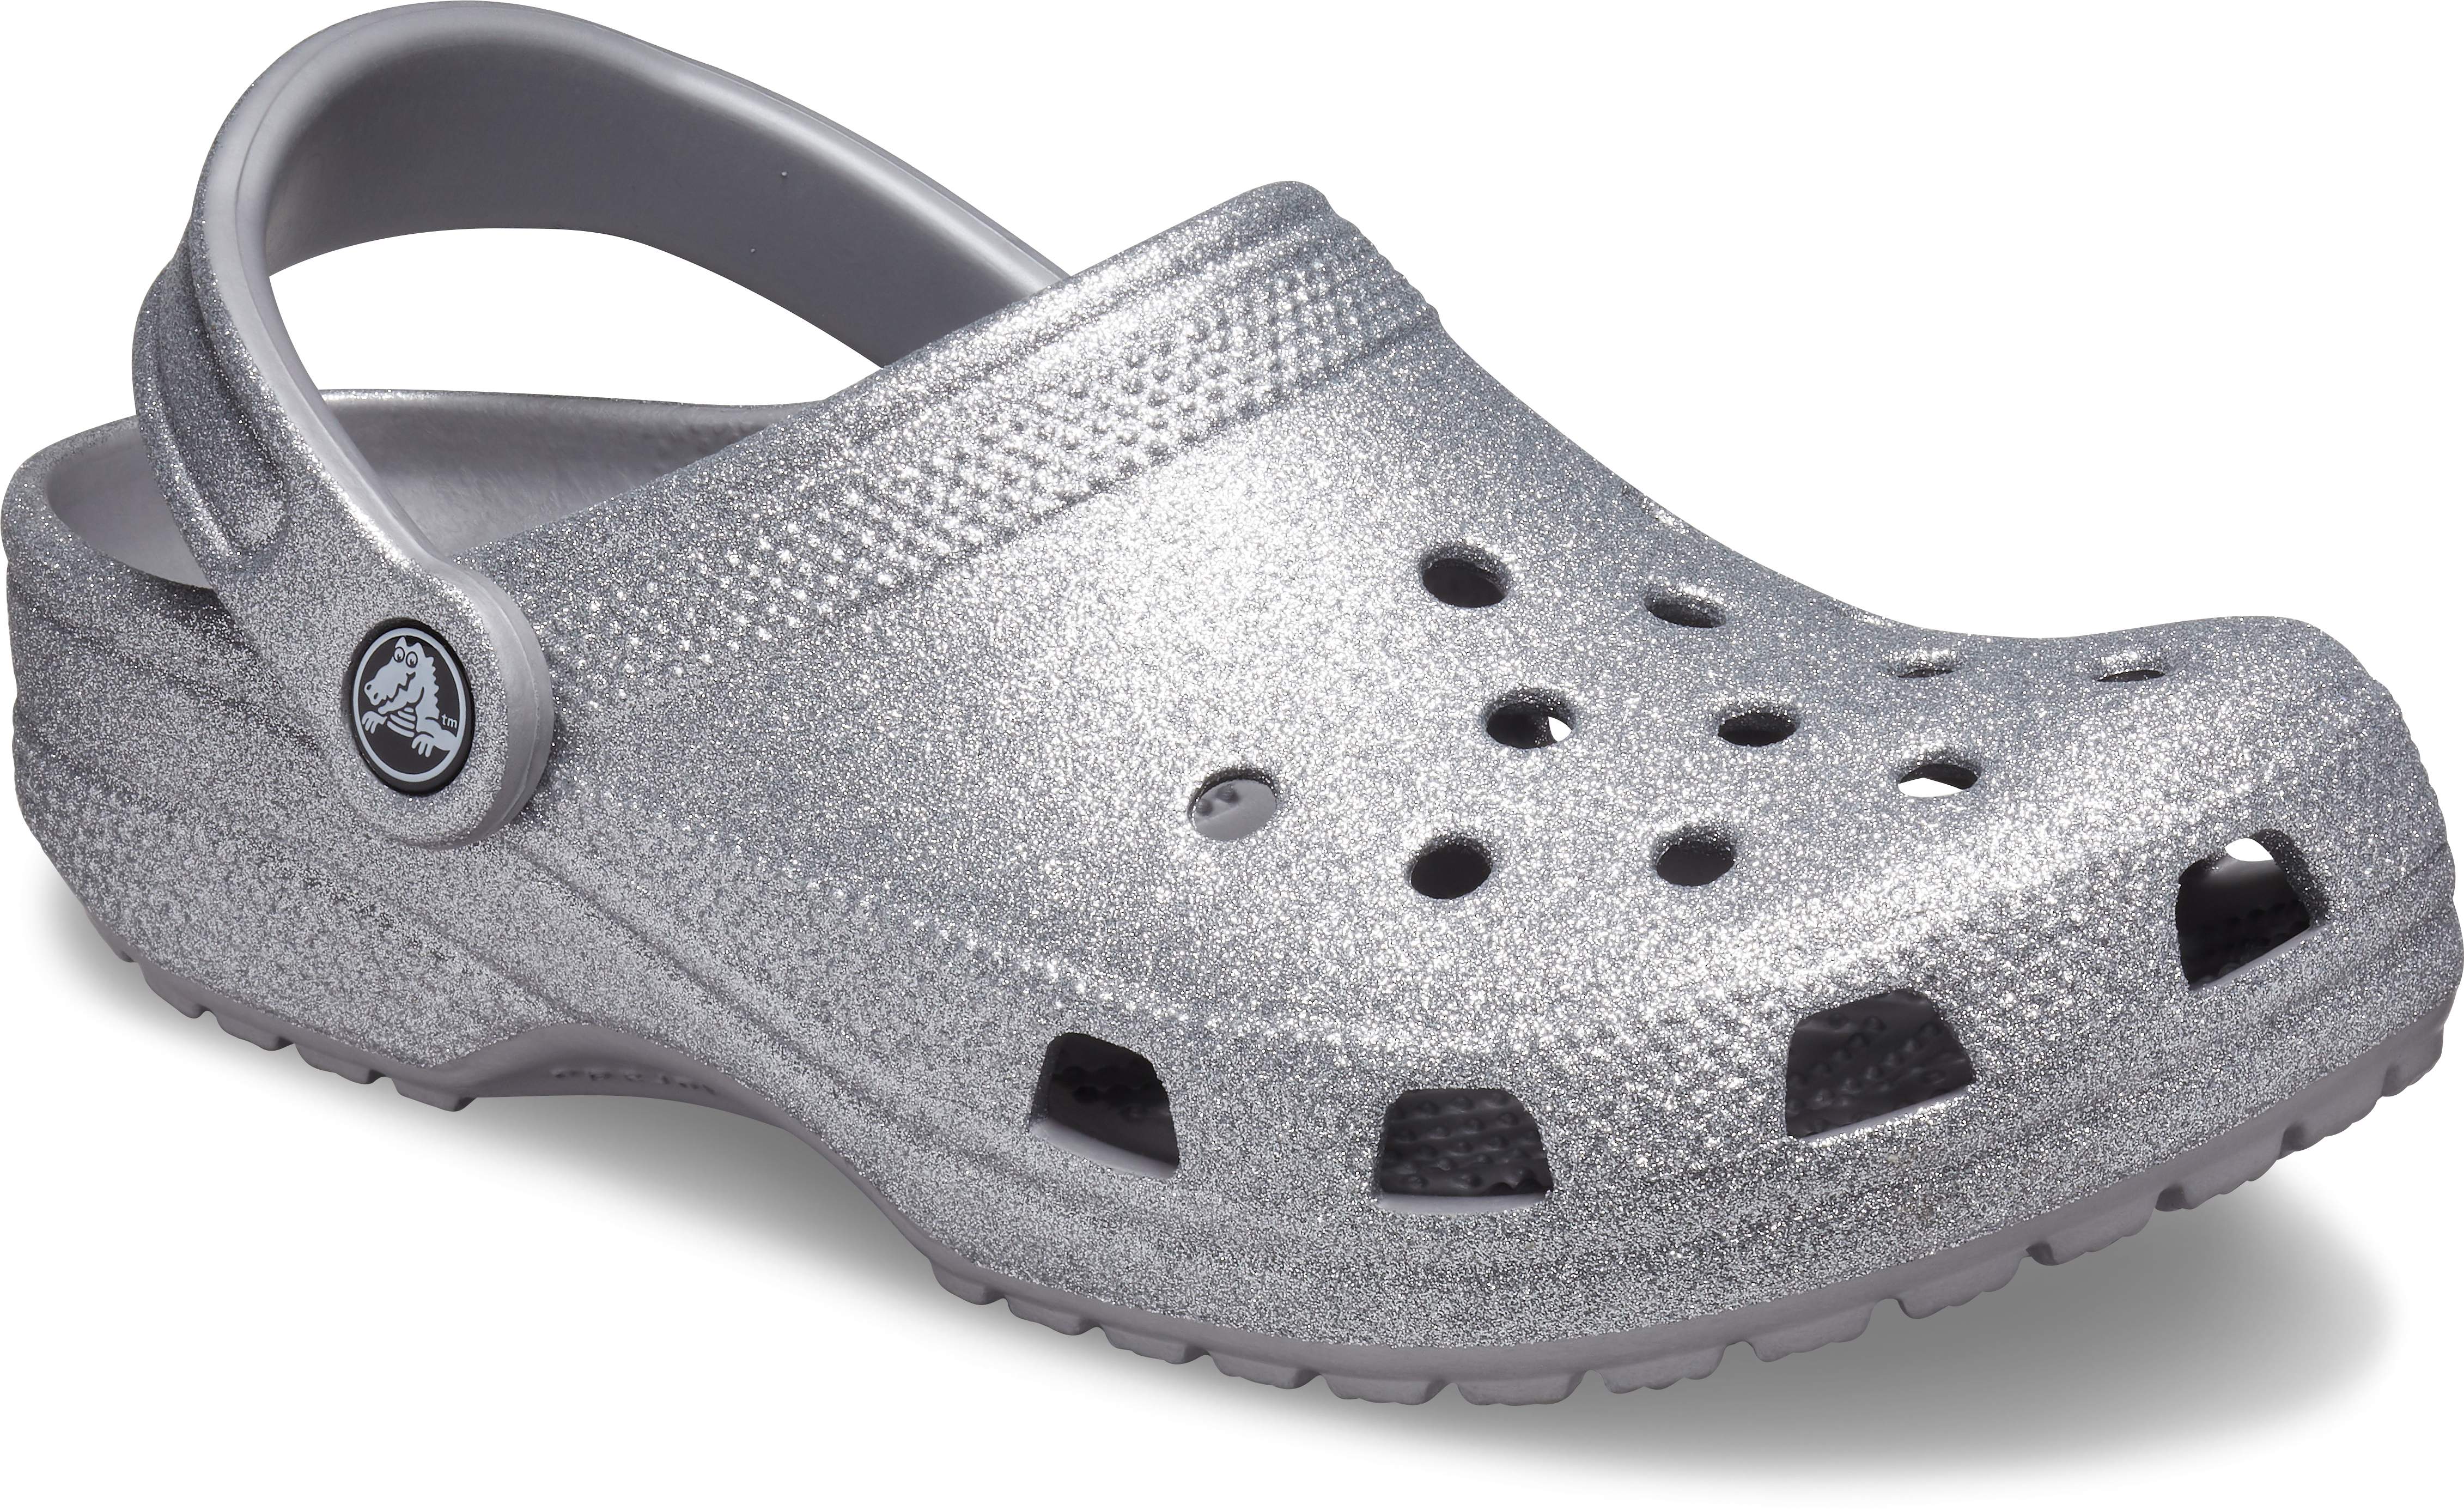 crocs with glitter